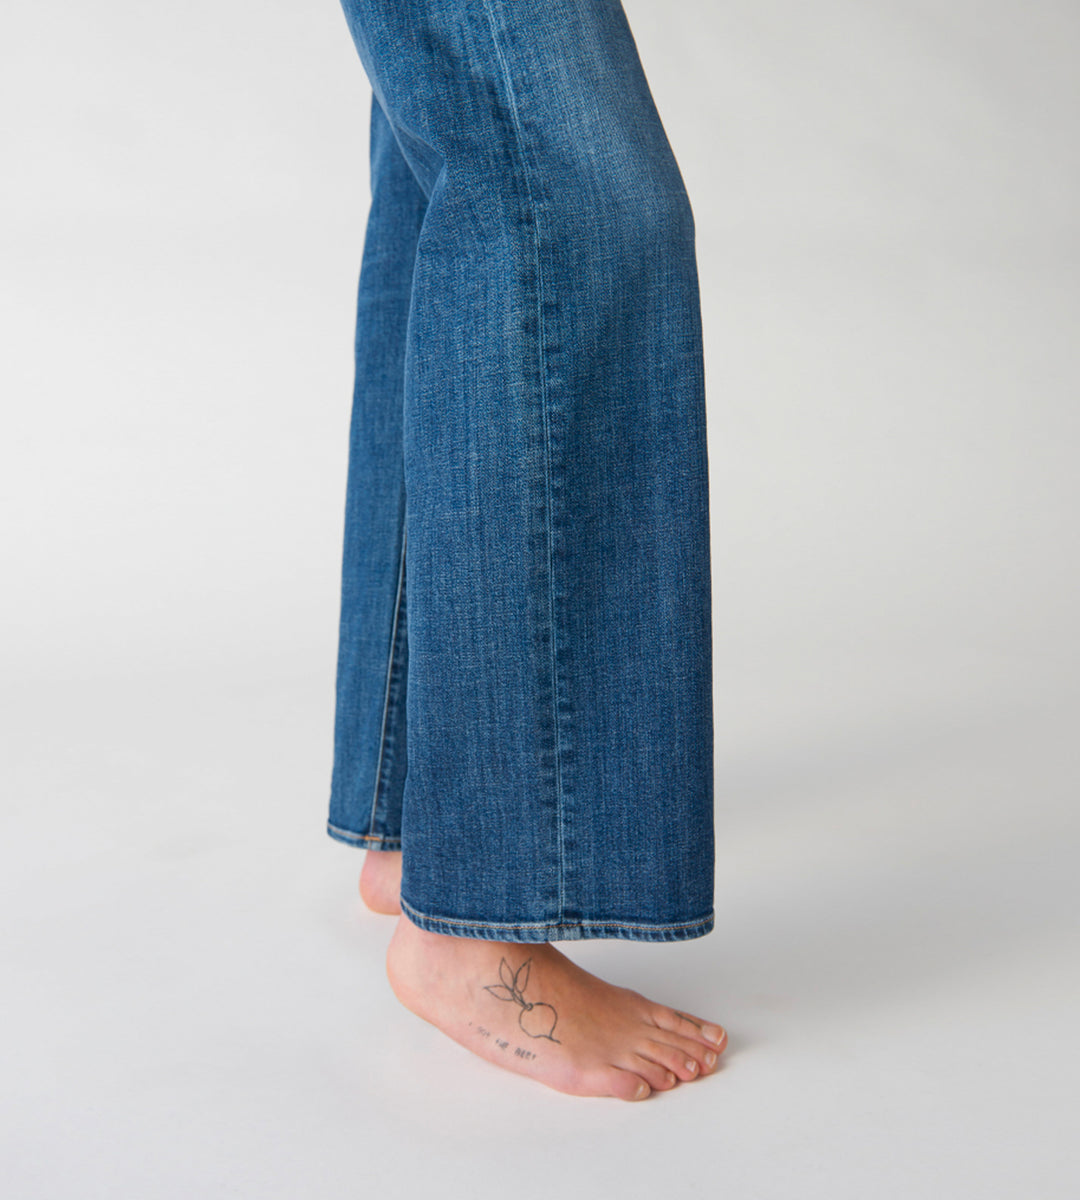 Jeanerica | Women's Pyramid 5-Pocket Jeans | Mid Vintage